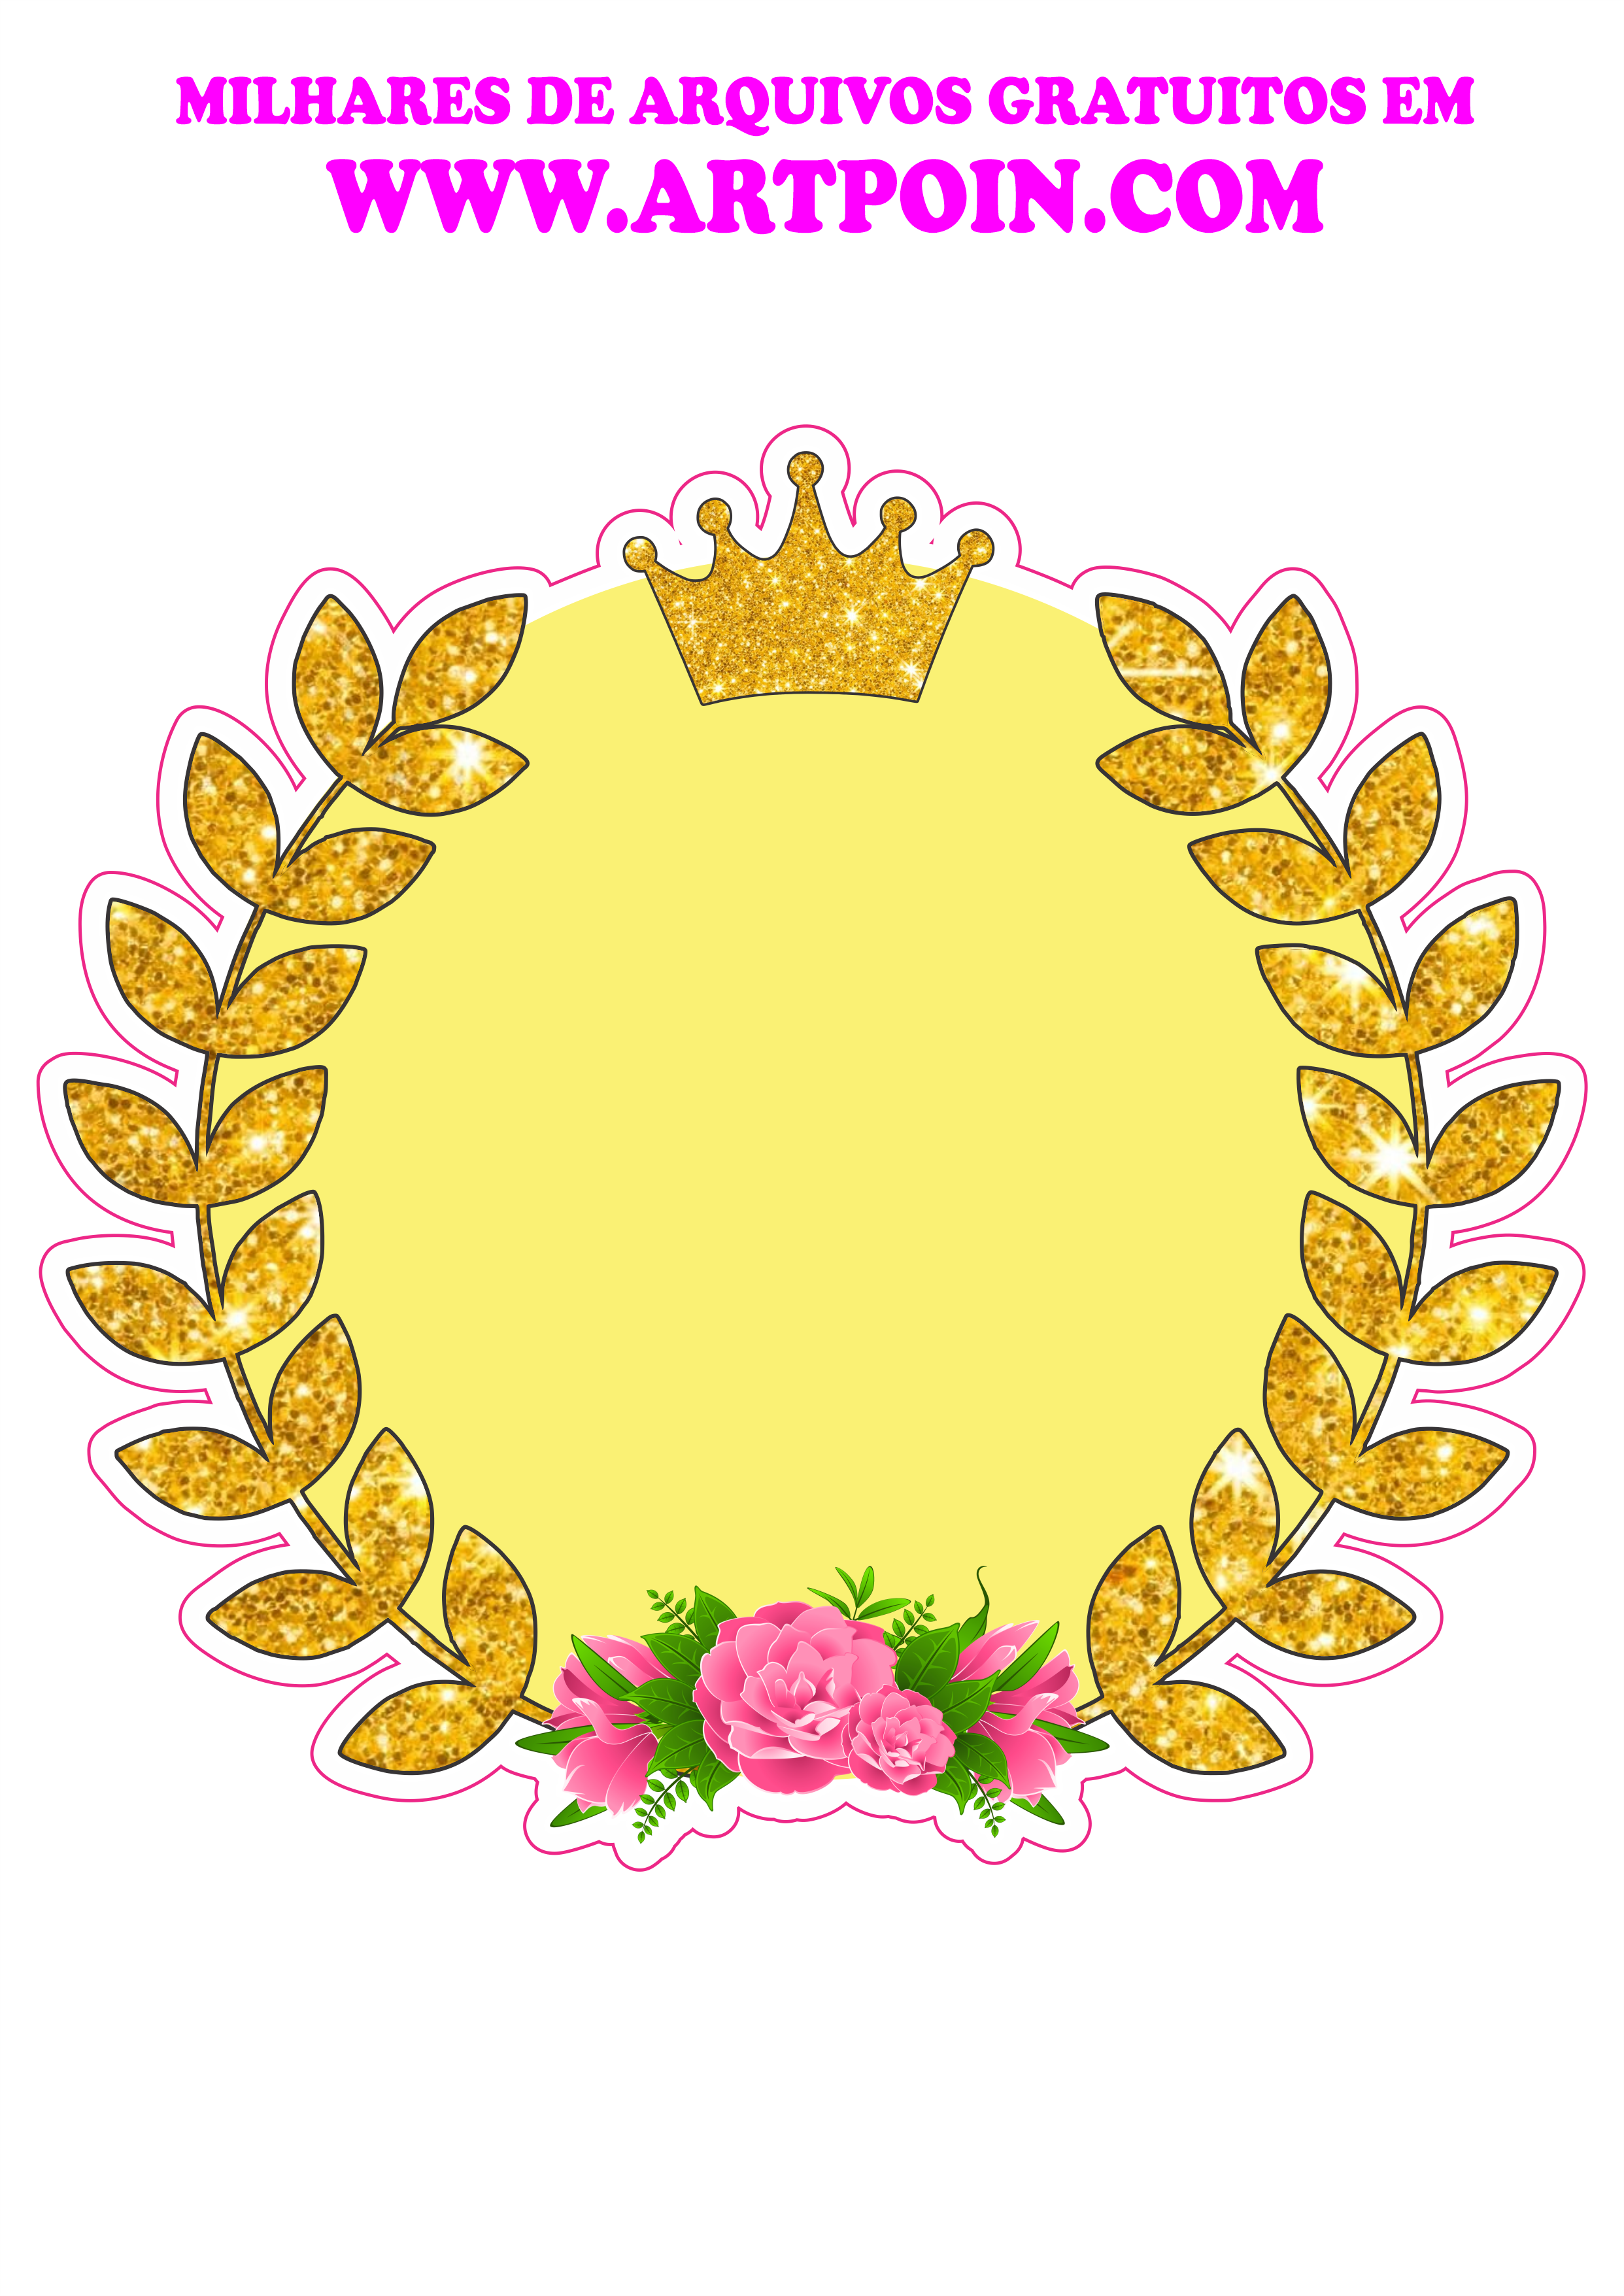 Logomarca com coroa e flores ramos dourados grátis png